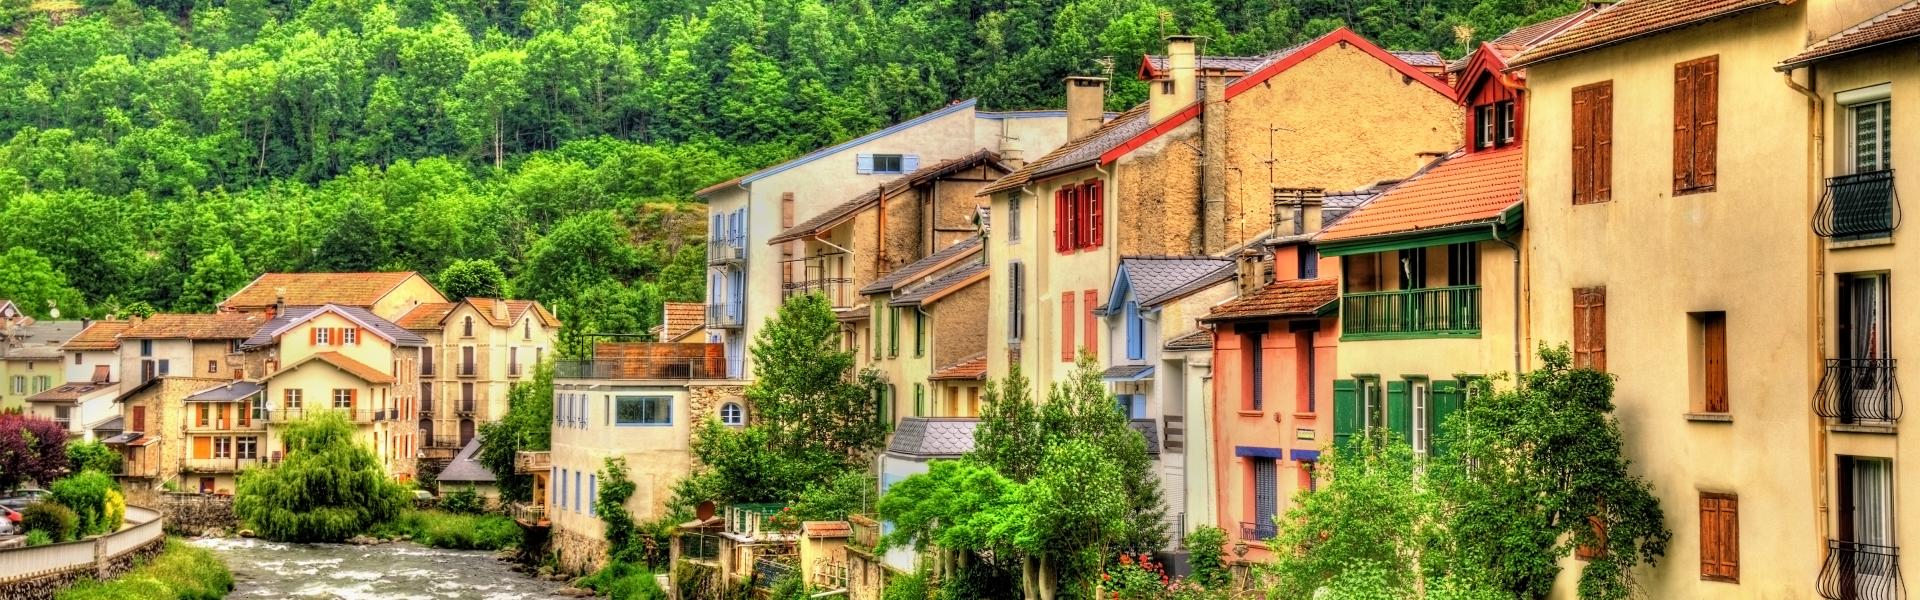 Locations de vacances et gites en Ariège - HomeToGo